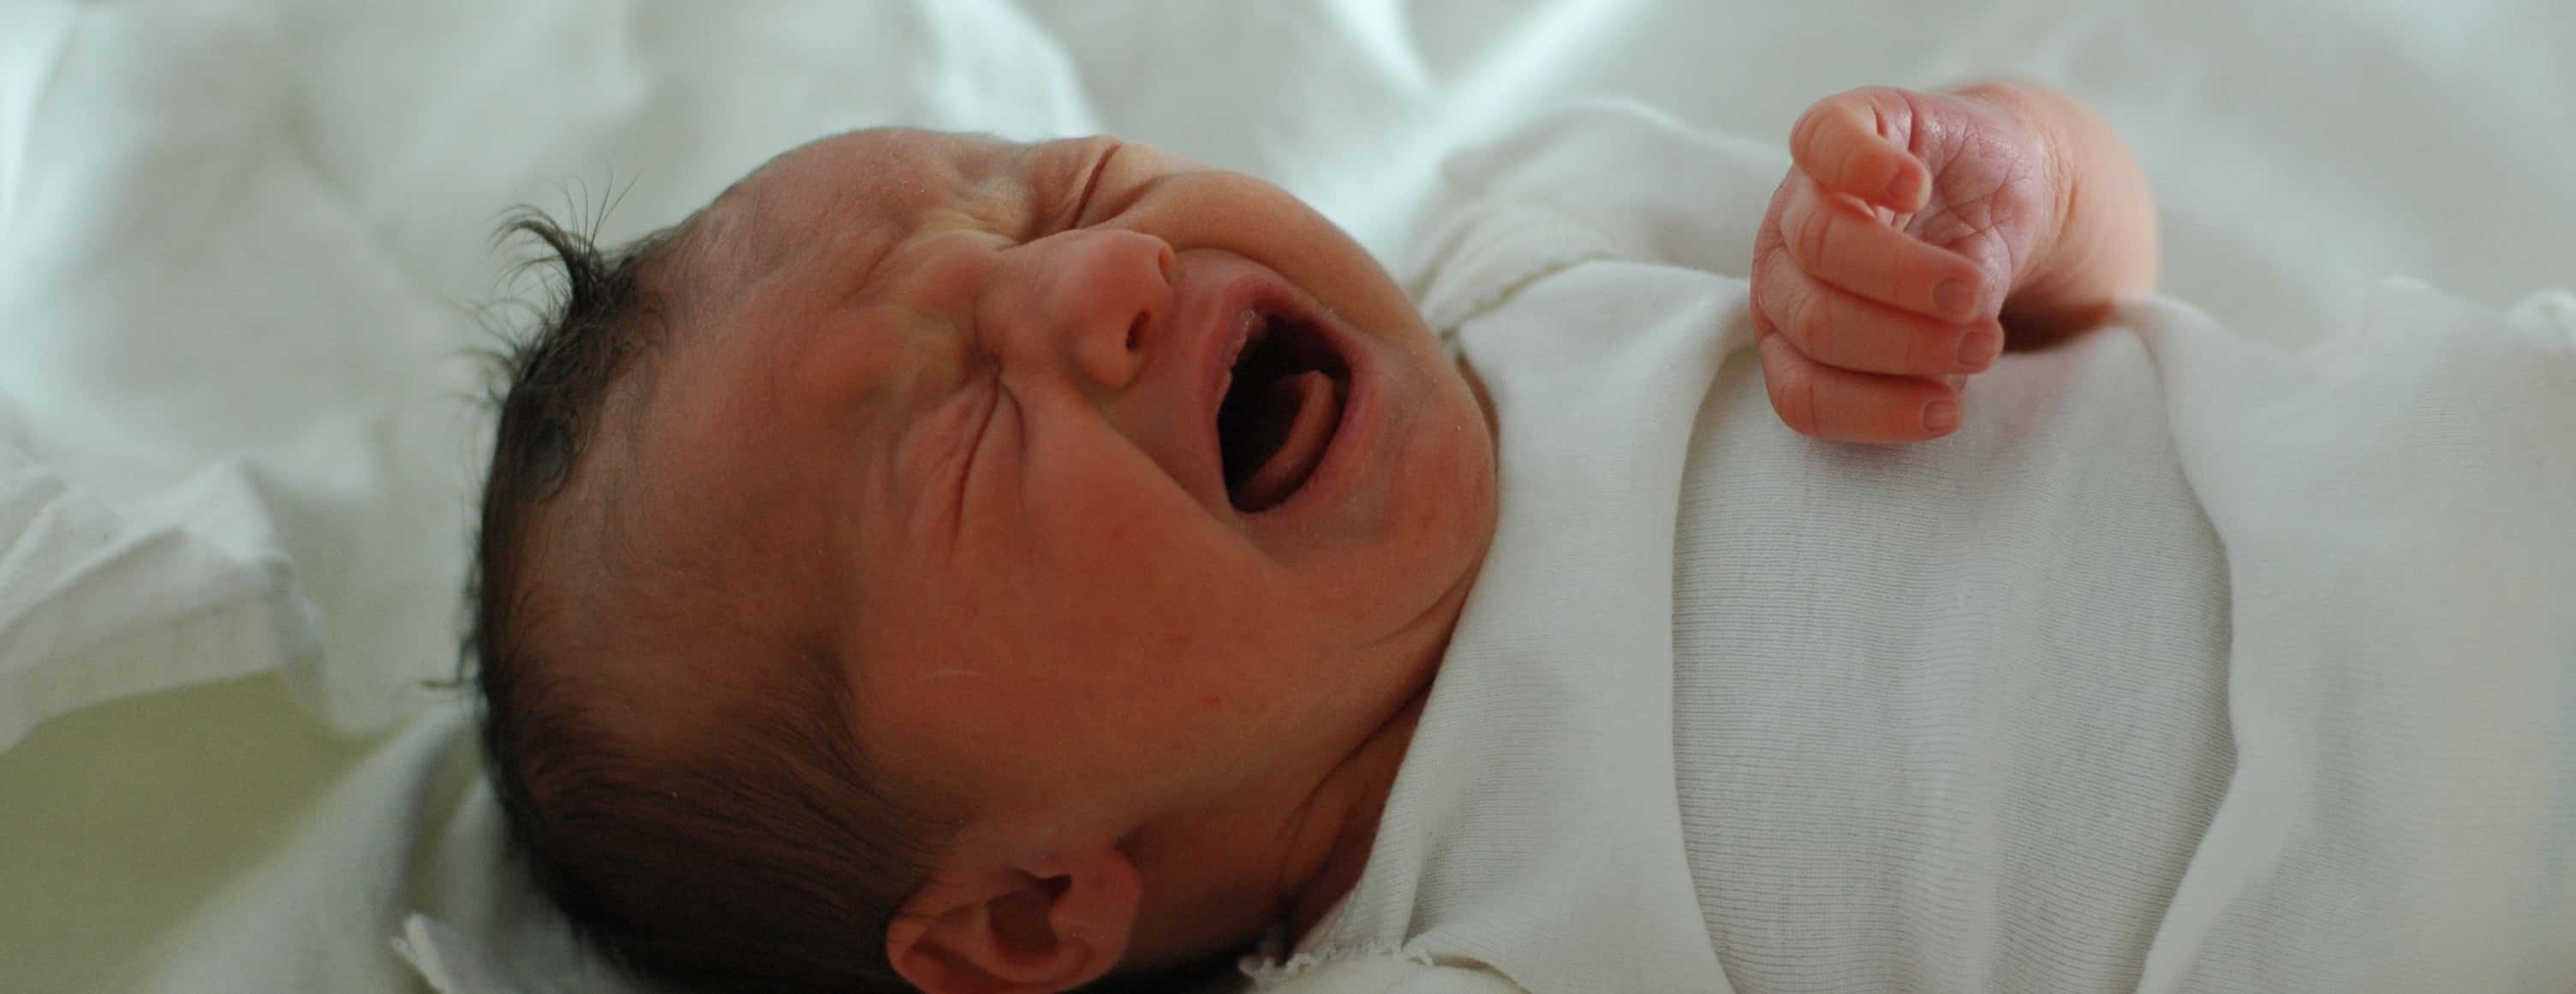 crying_newborn-cropped